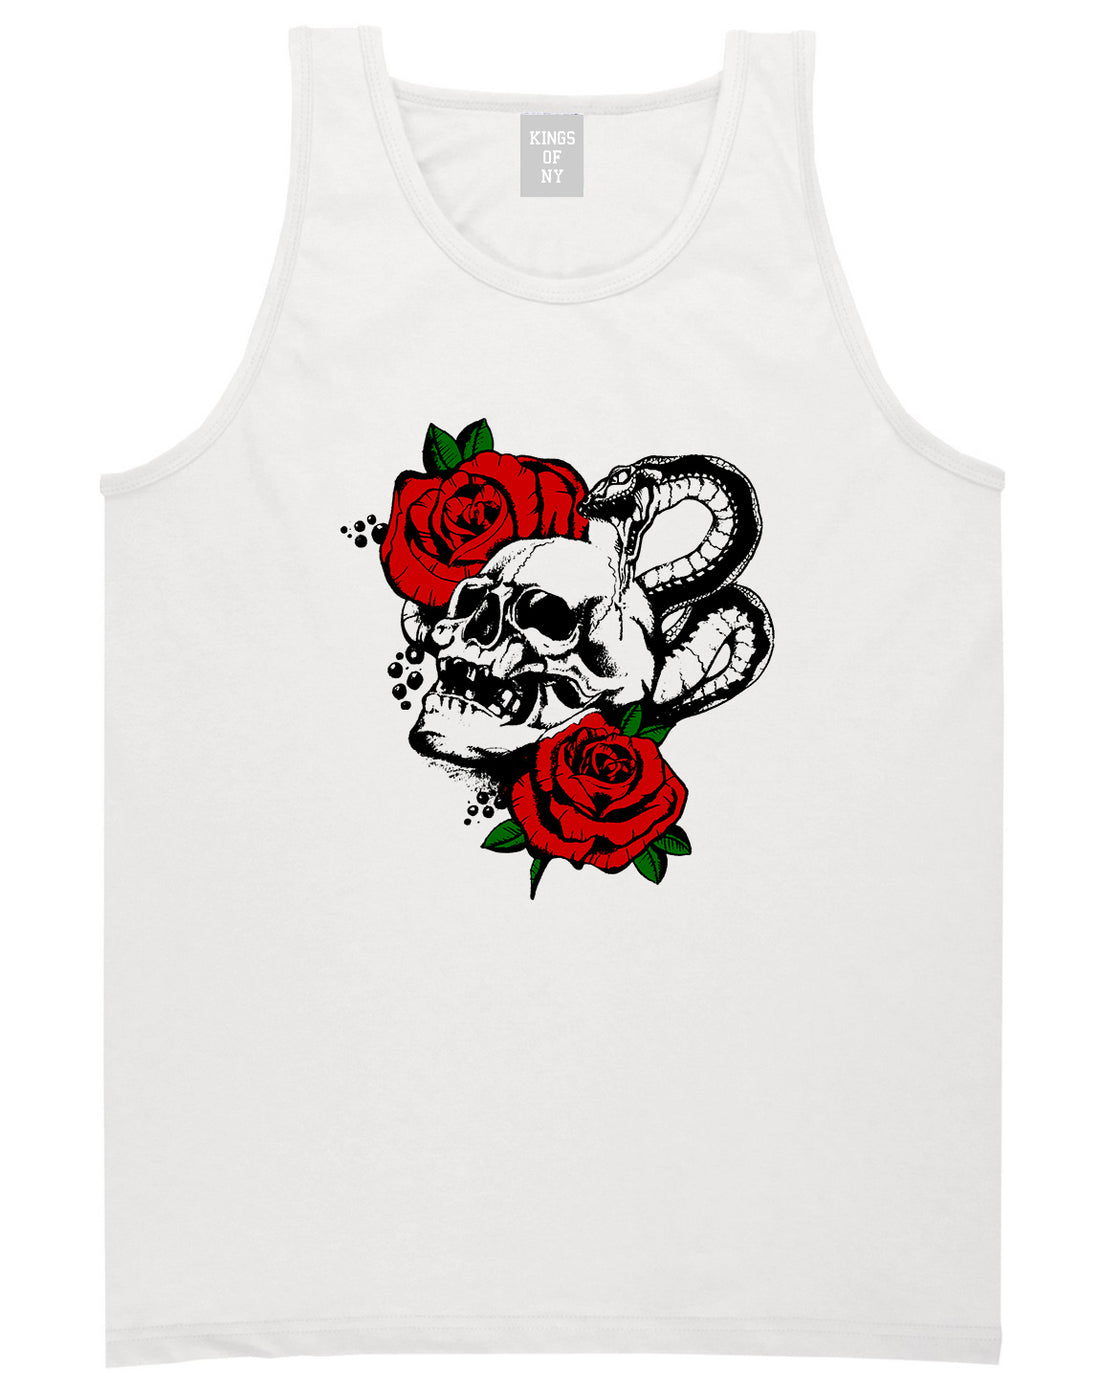 Skull And Roses Mens Tank Top Shirt White